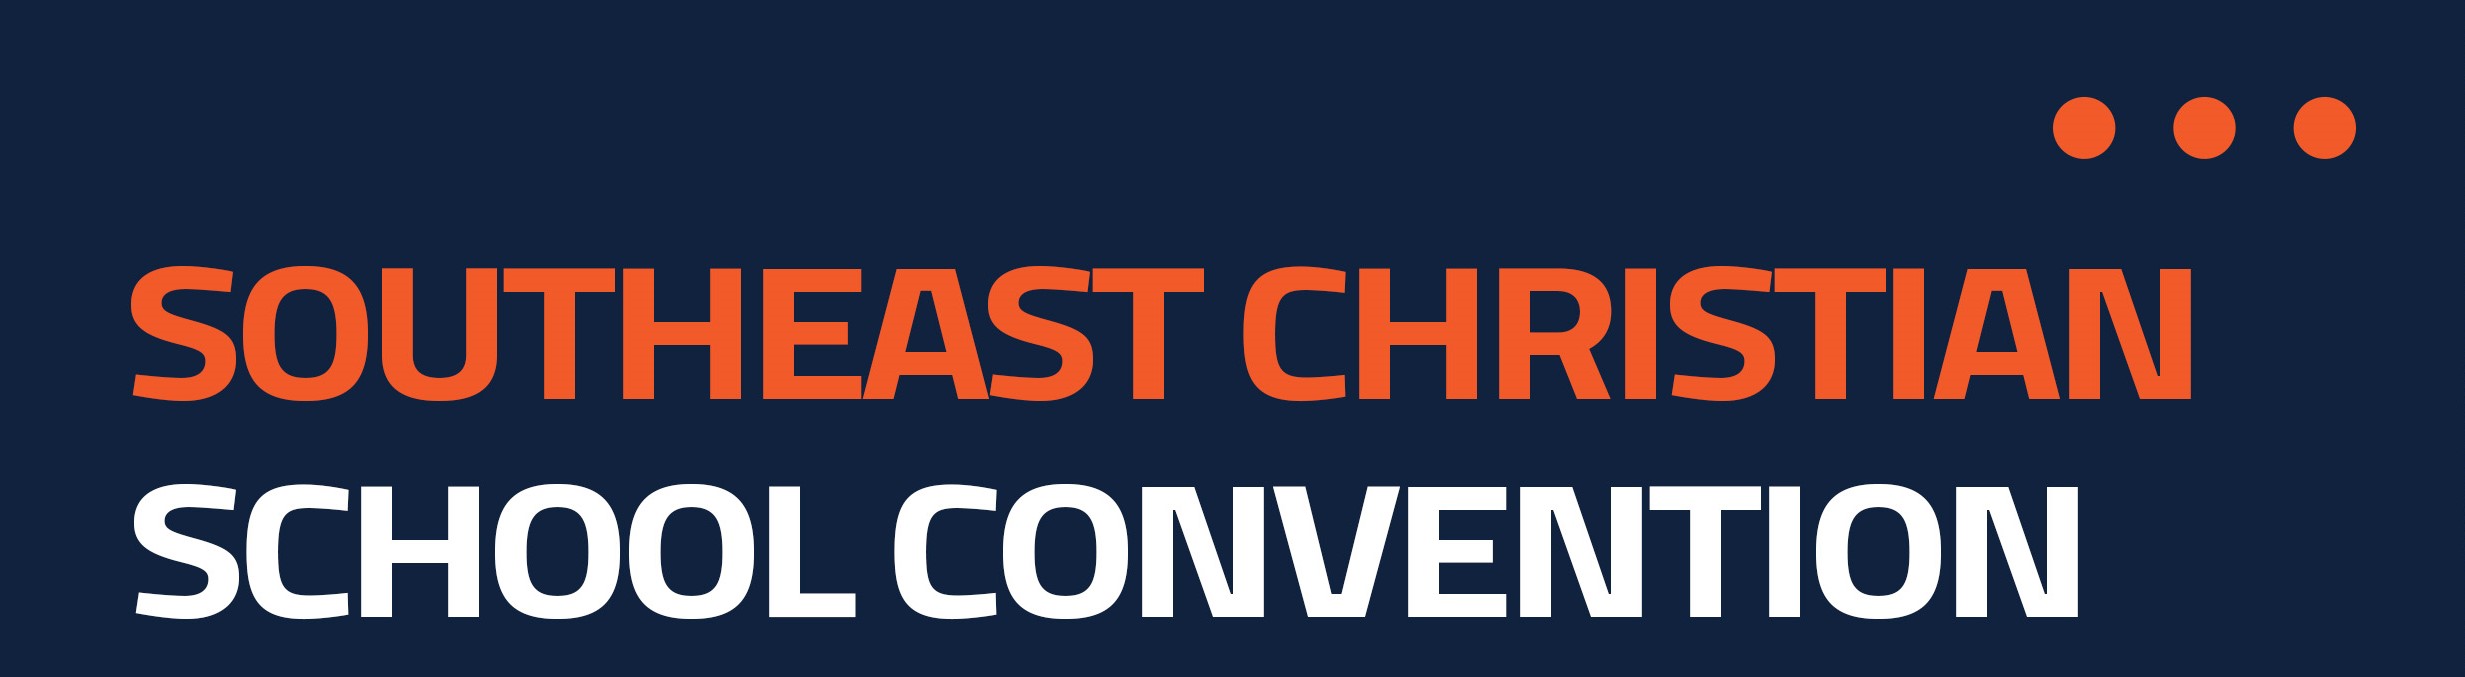 Southeast Christian Schools Convention Christian School Management